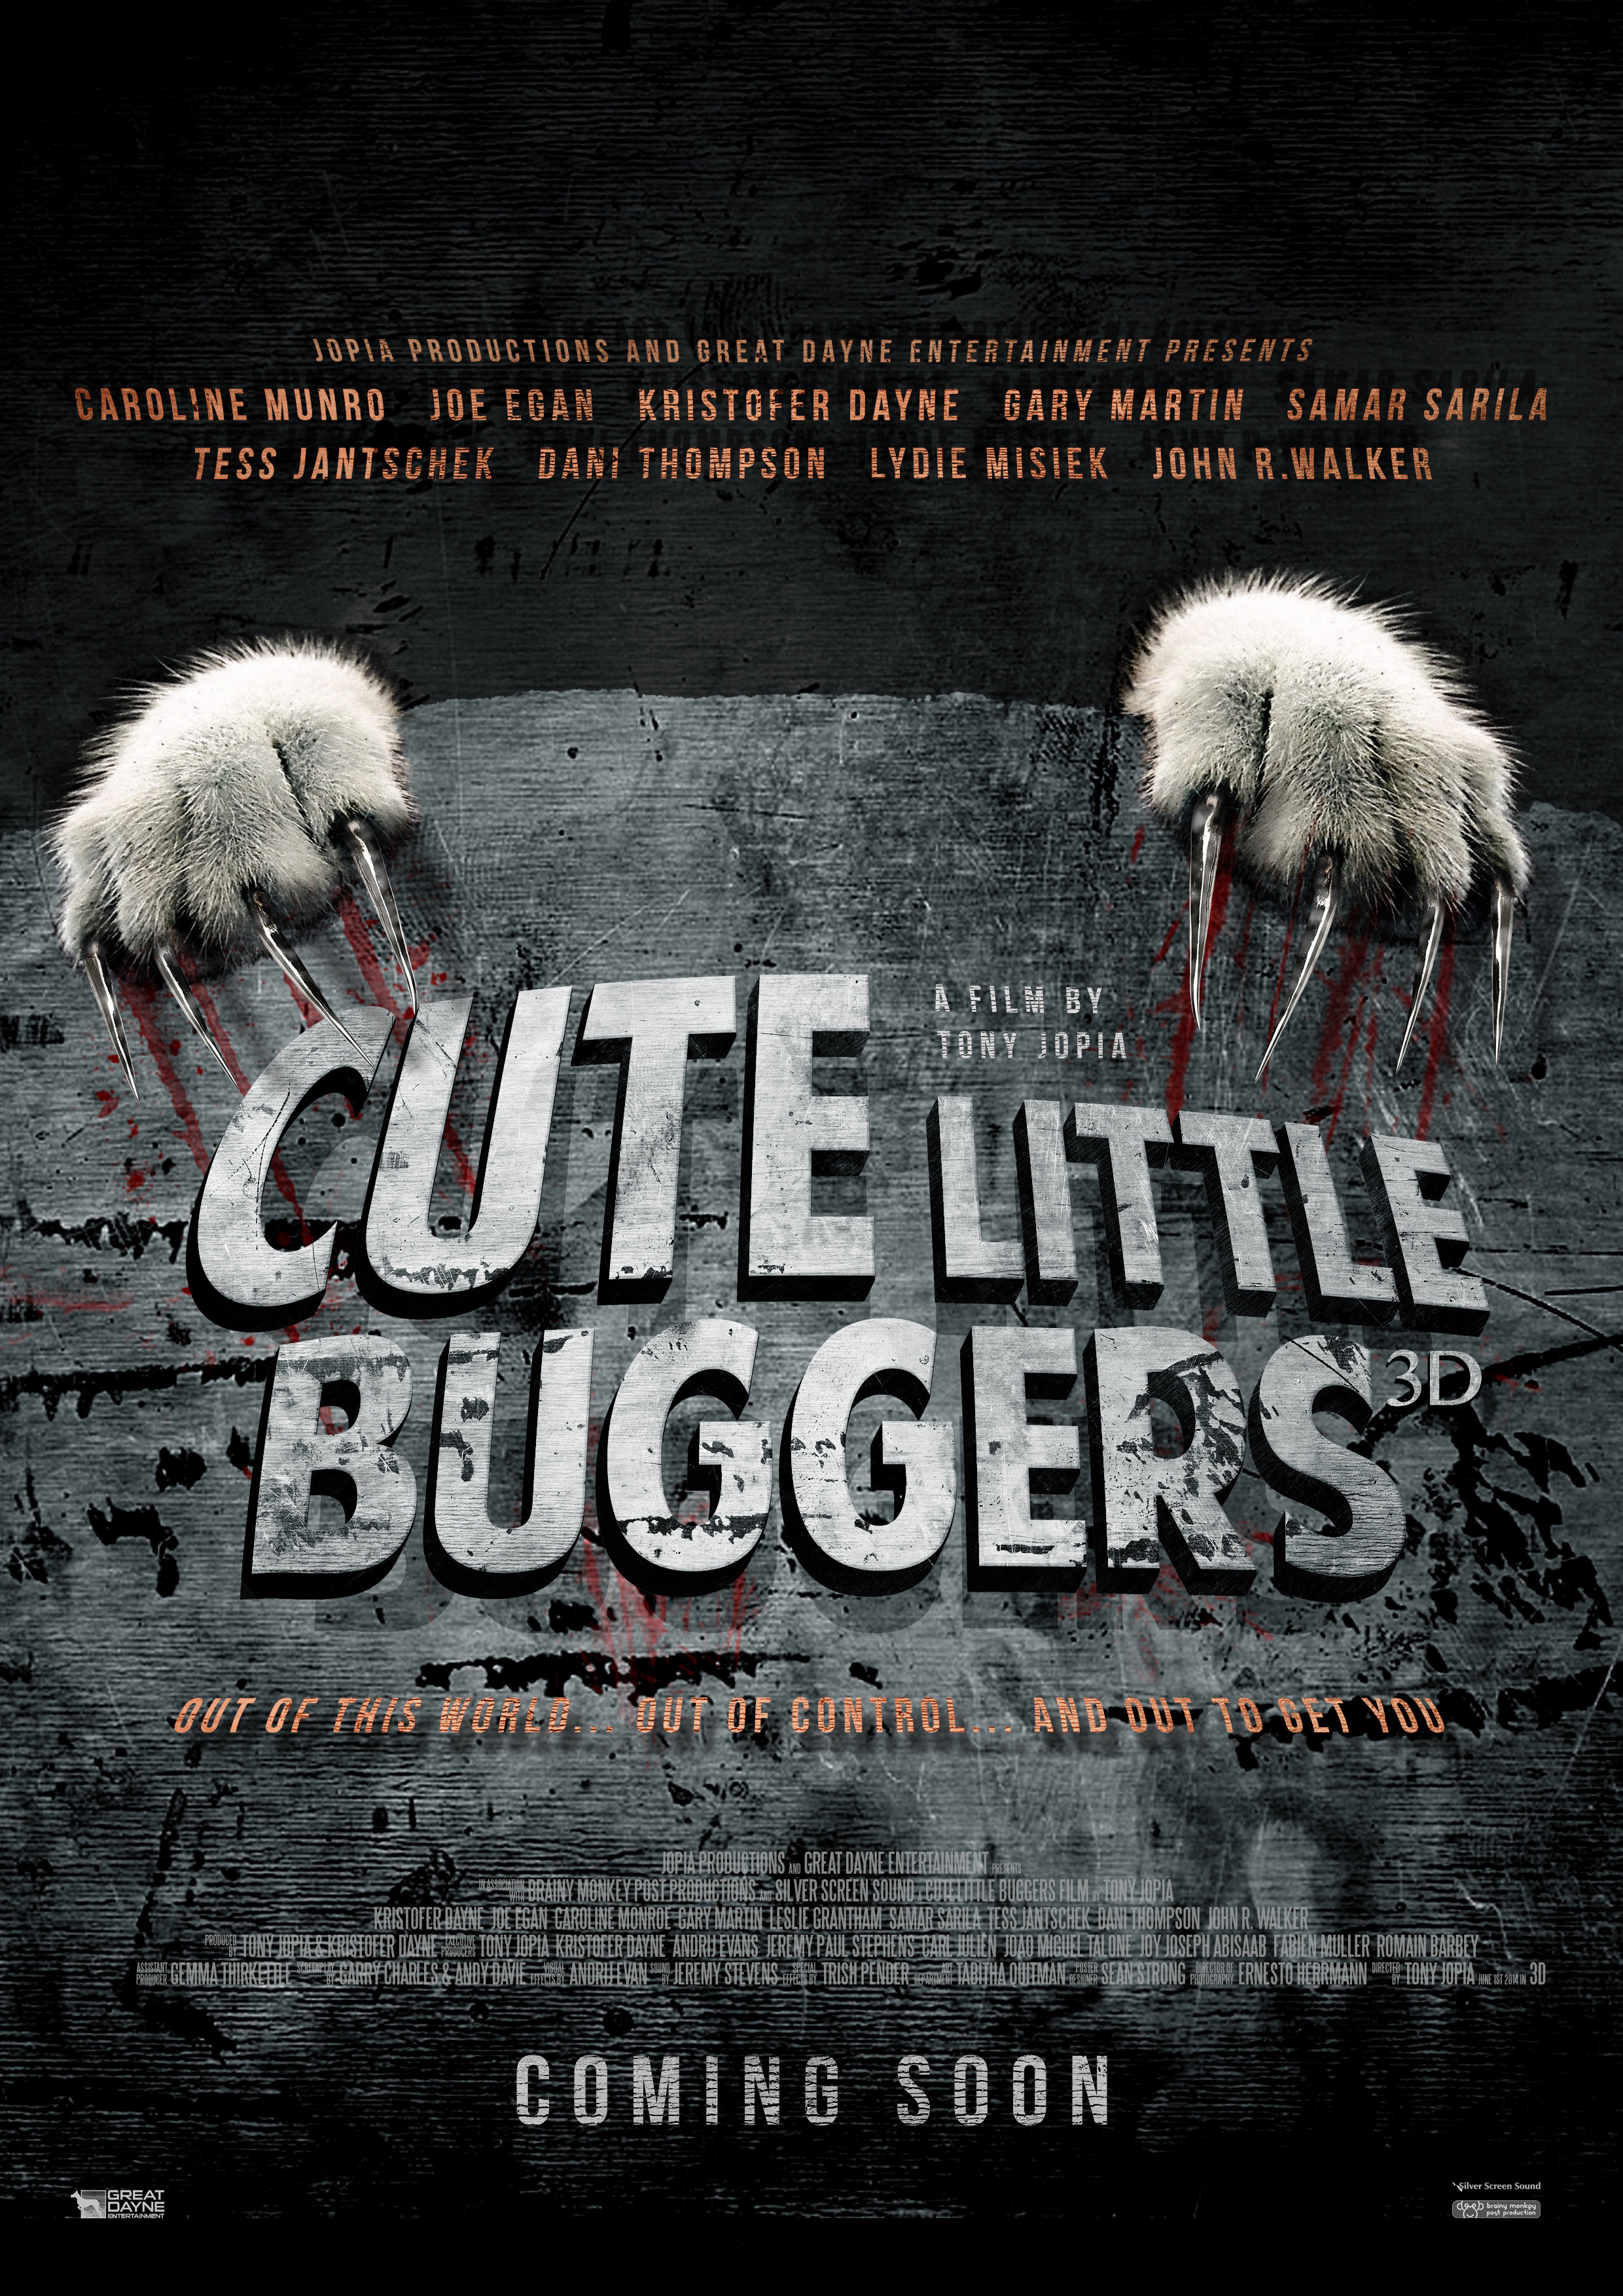 Nonton film Cute Little Buggers layarkaca21 indoxx1 ganool online streaming terbaru